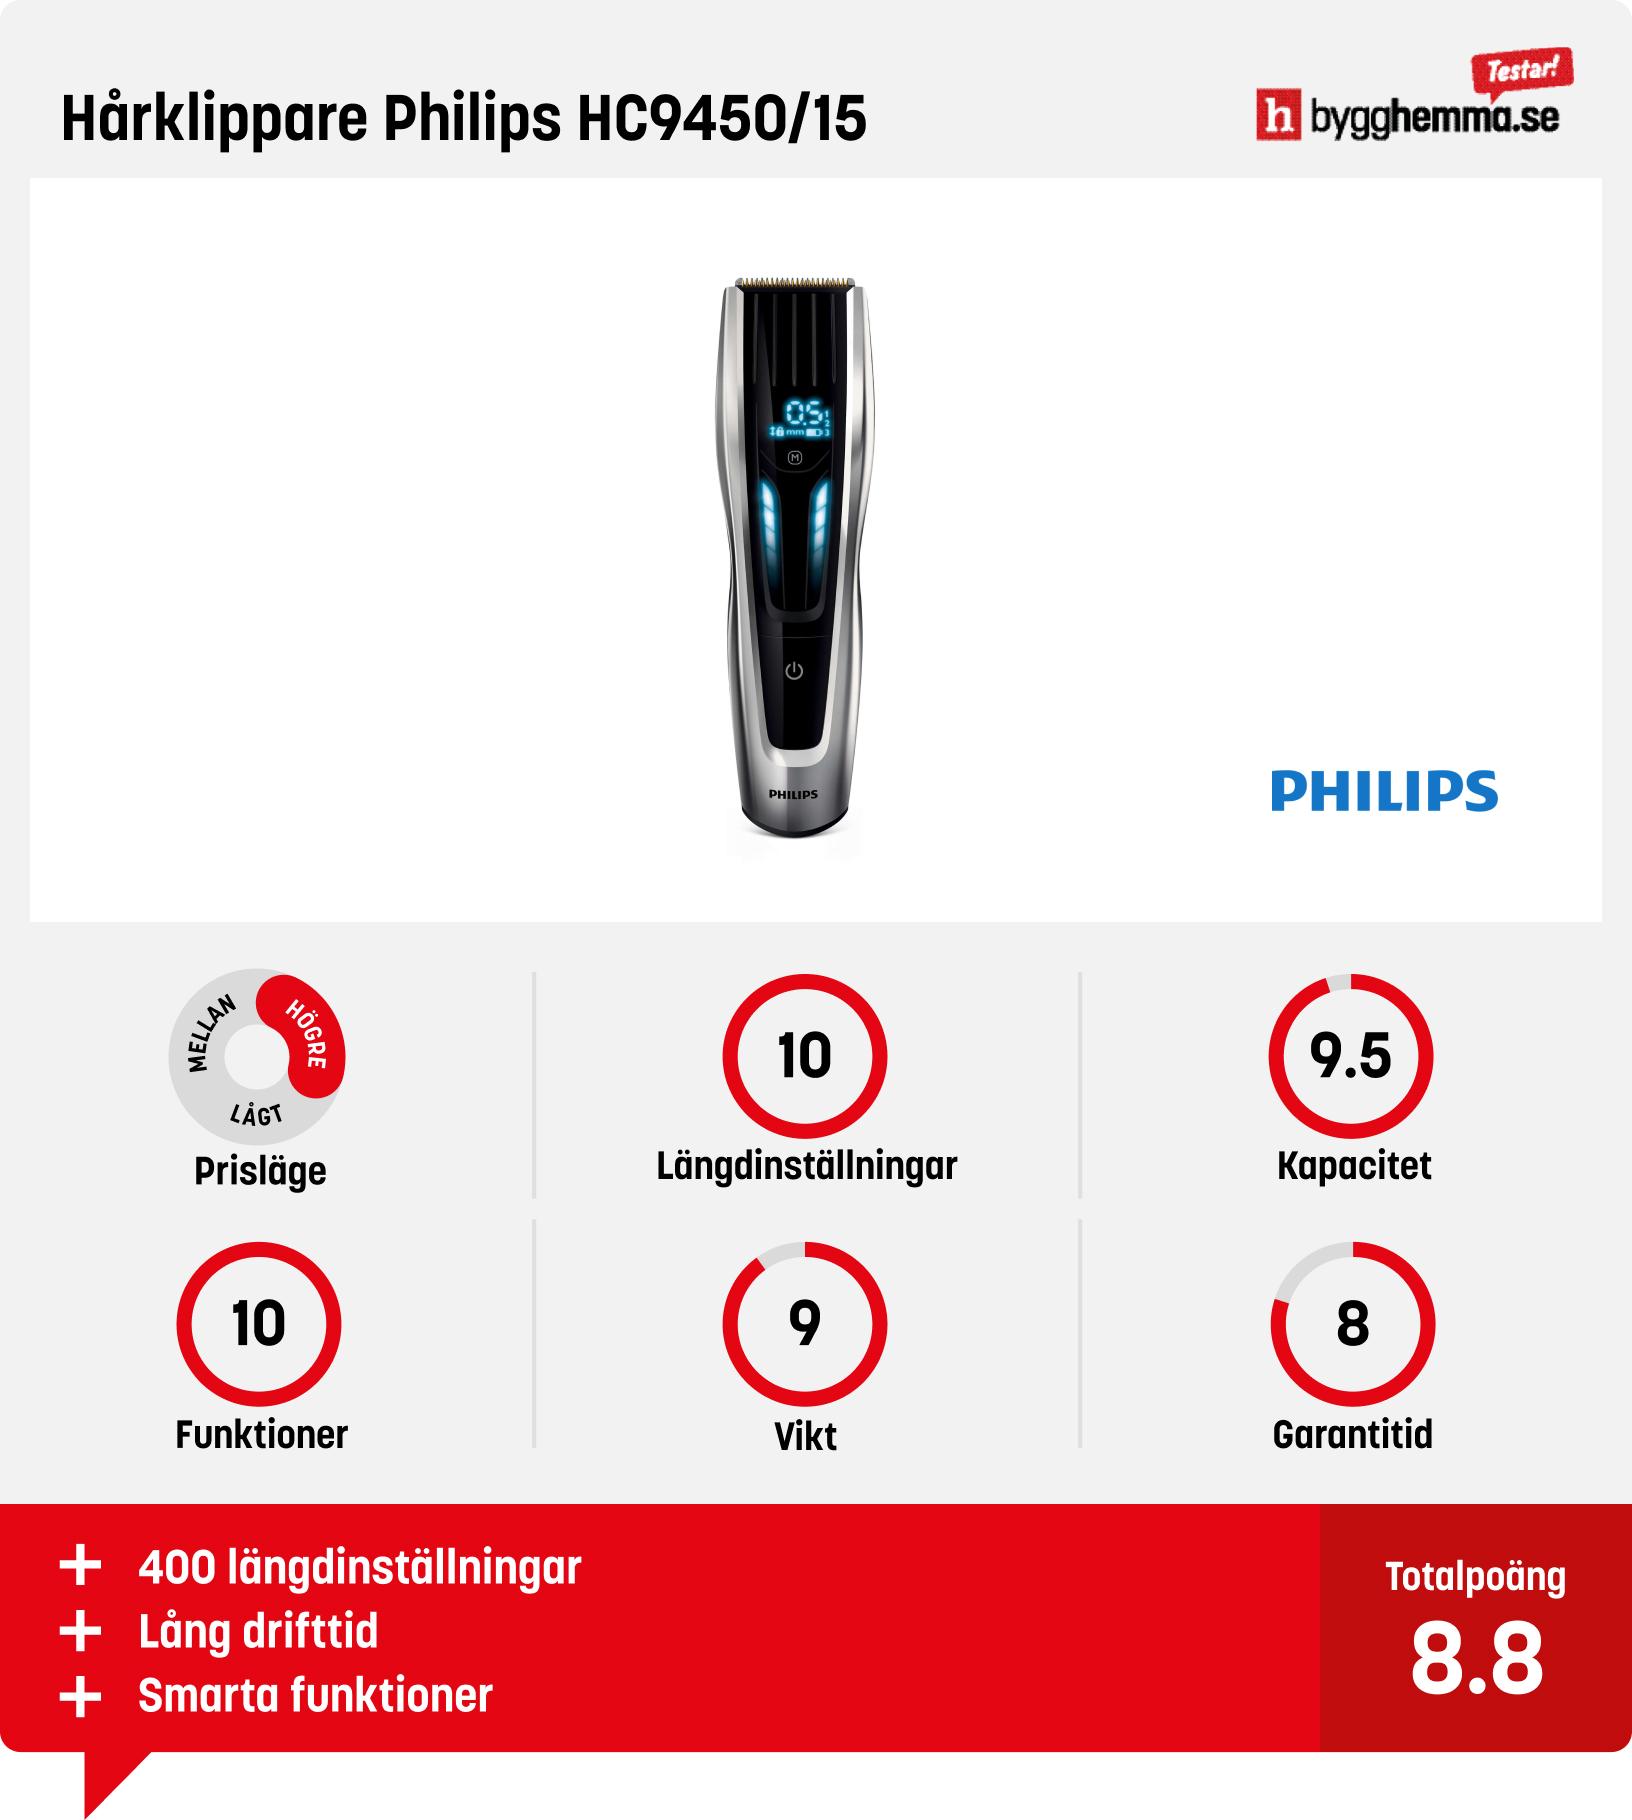 Hårtrimmer bäst i test - Hårklippare Philips HC9450/15